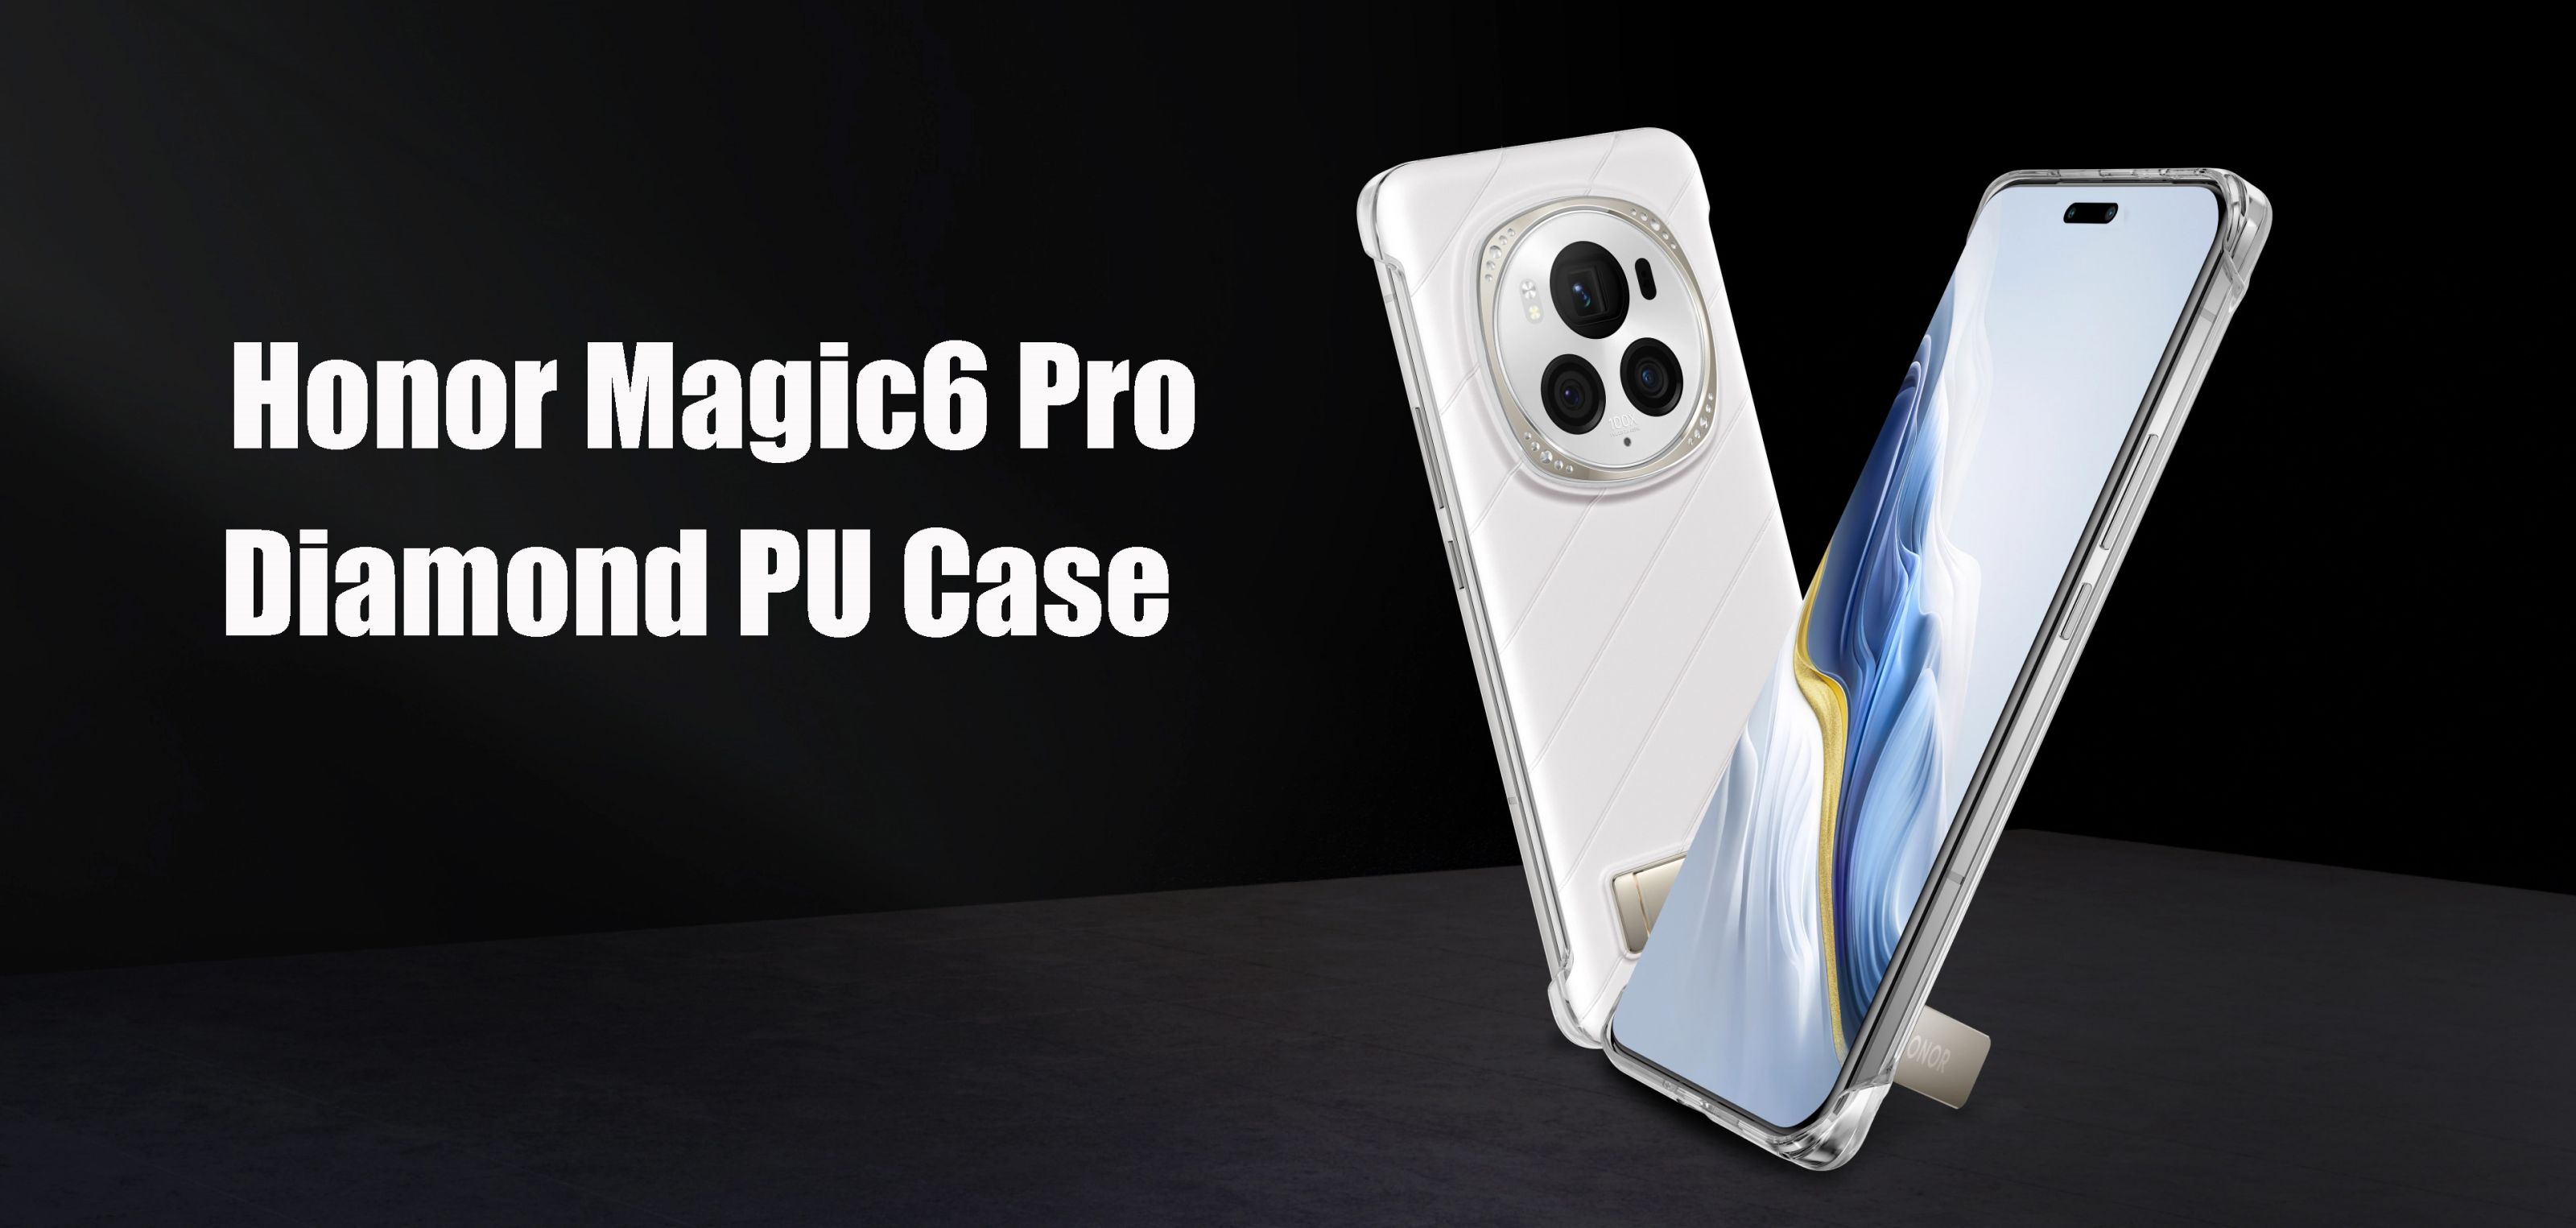 Honor Magic6 Pro Diamond PU Case